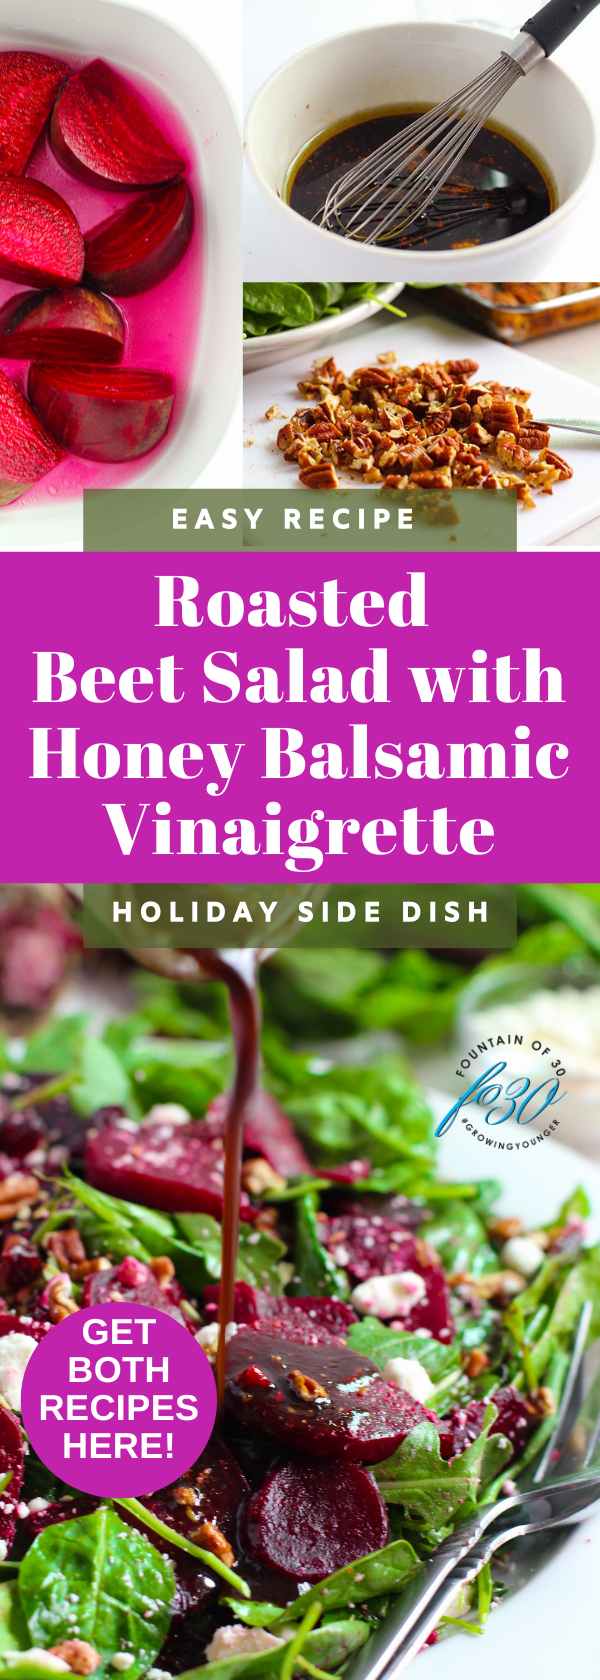 holiday side dish beet salad recipe fountainof30